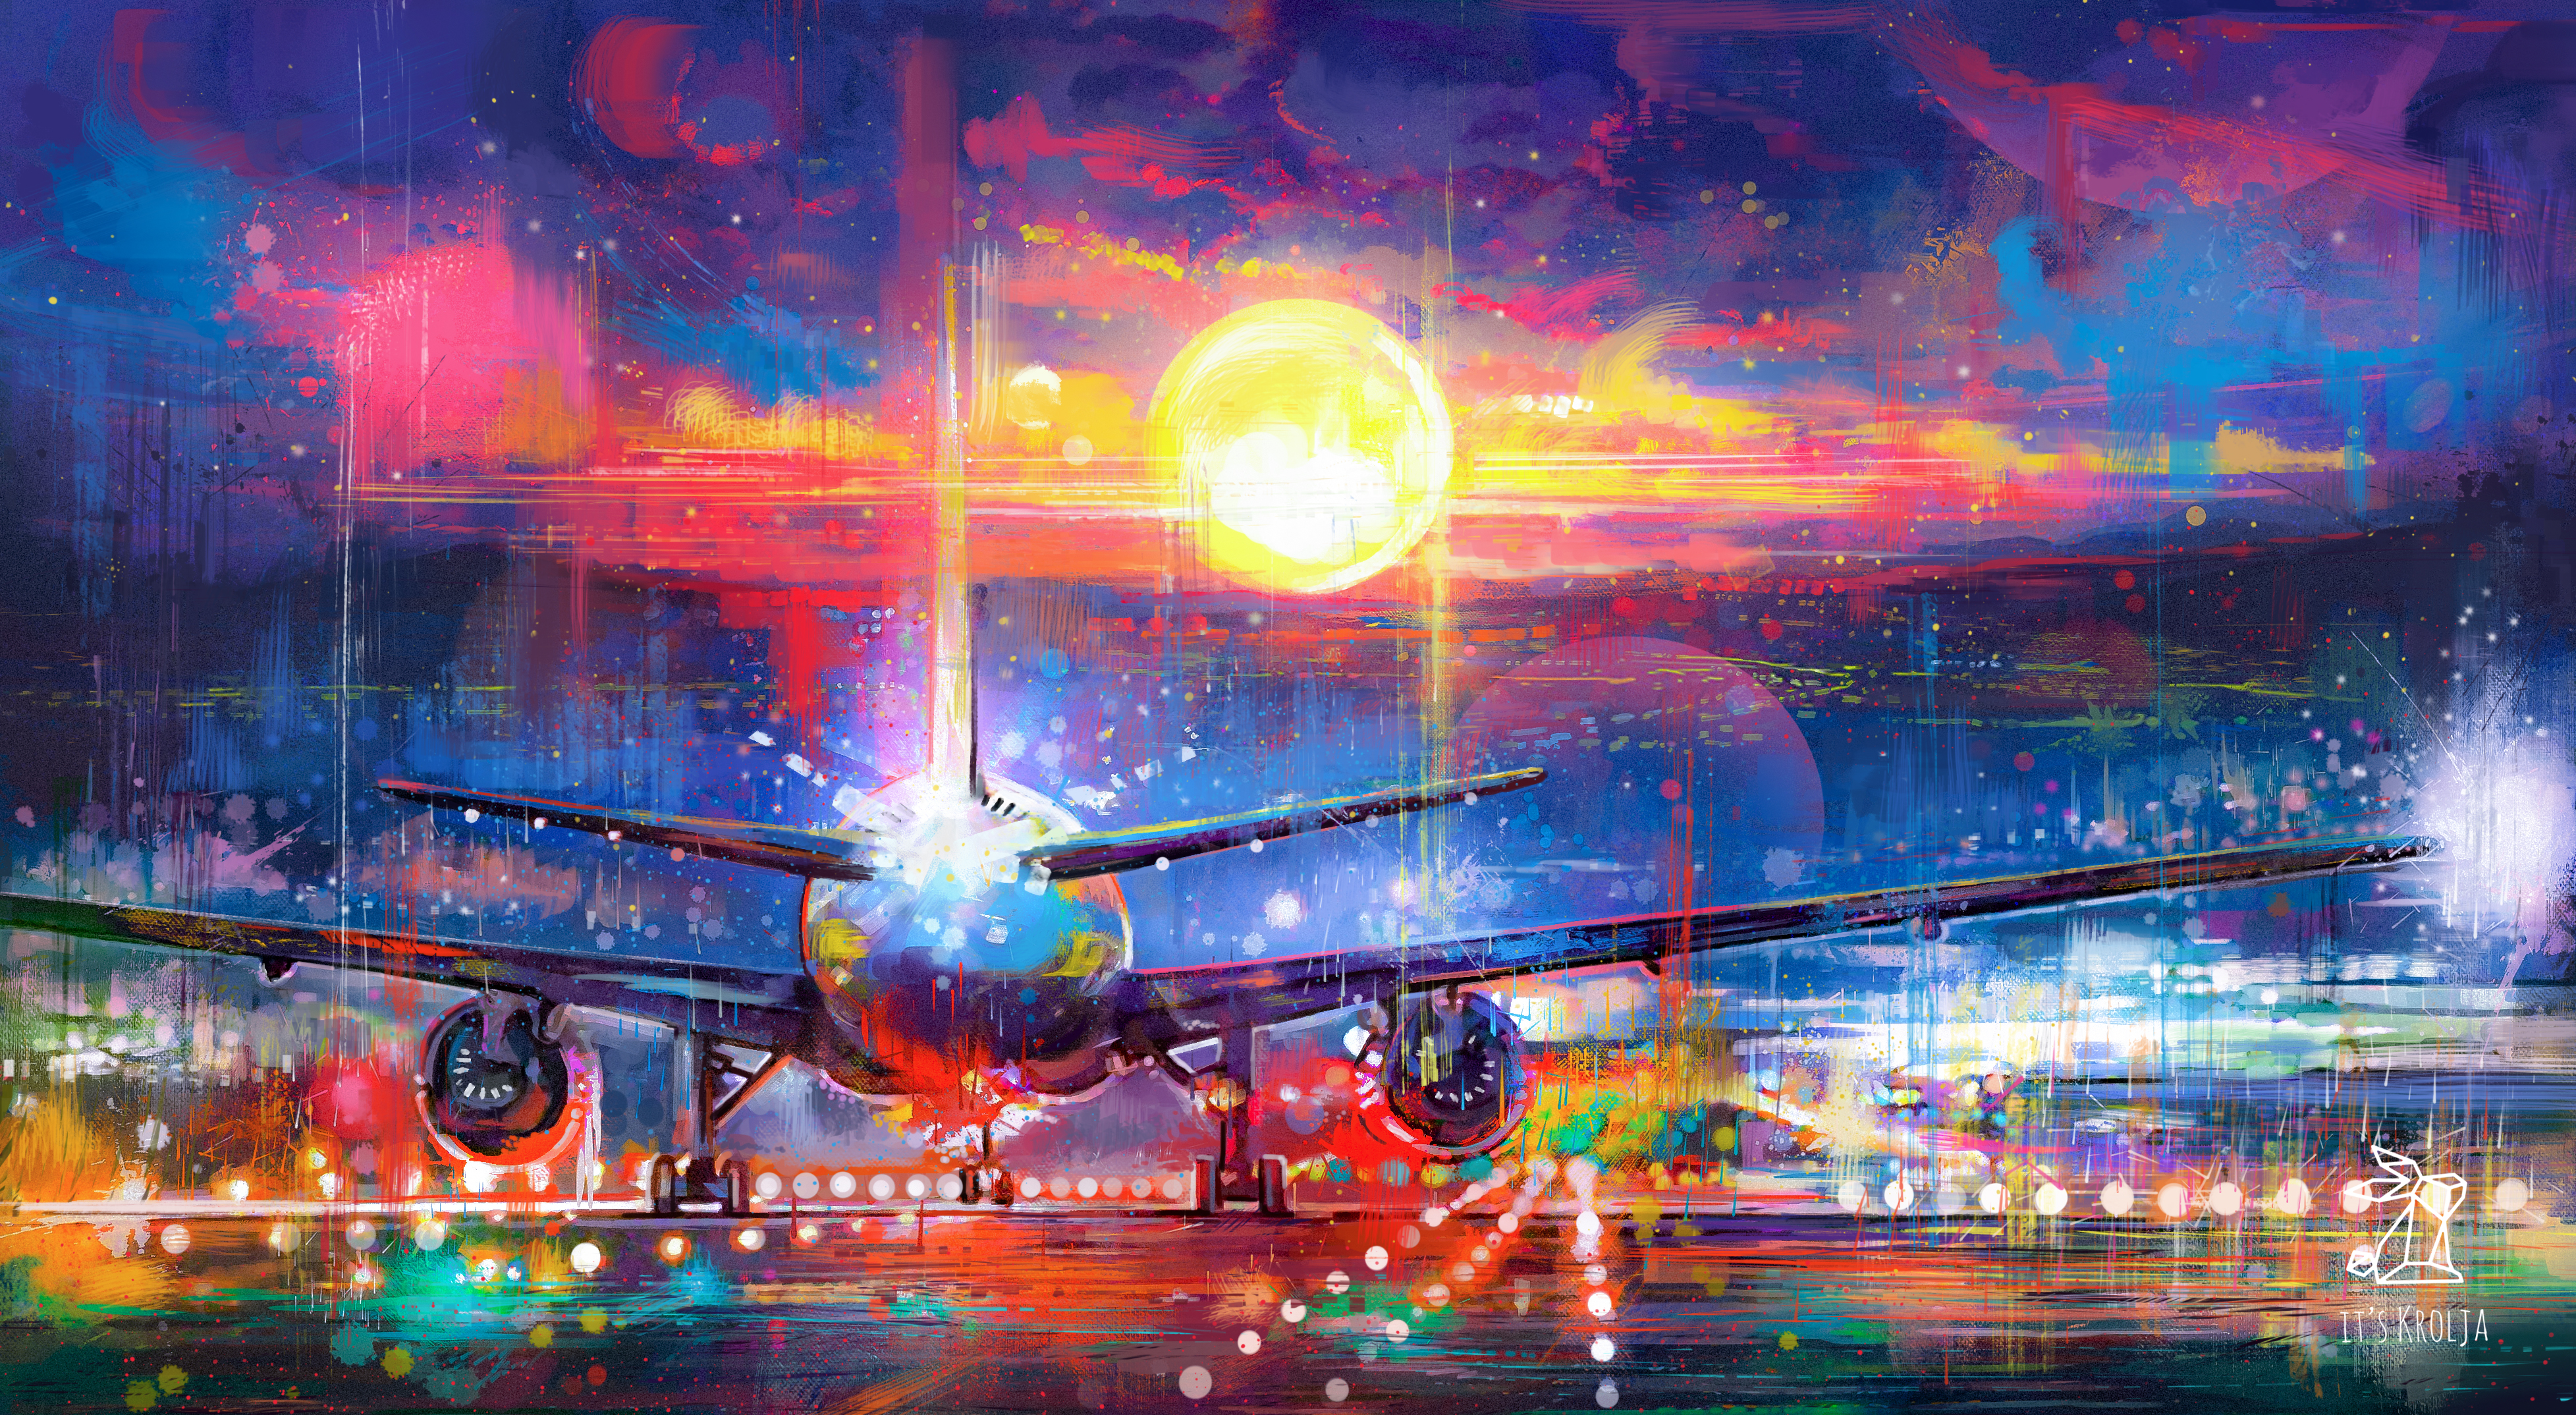 General 3911x2148 digital painting aircraft rain night airport itskrolja